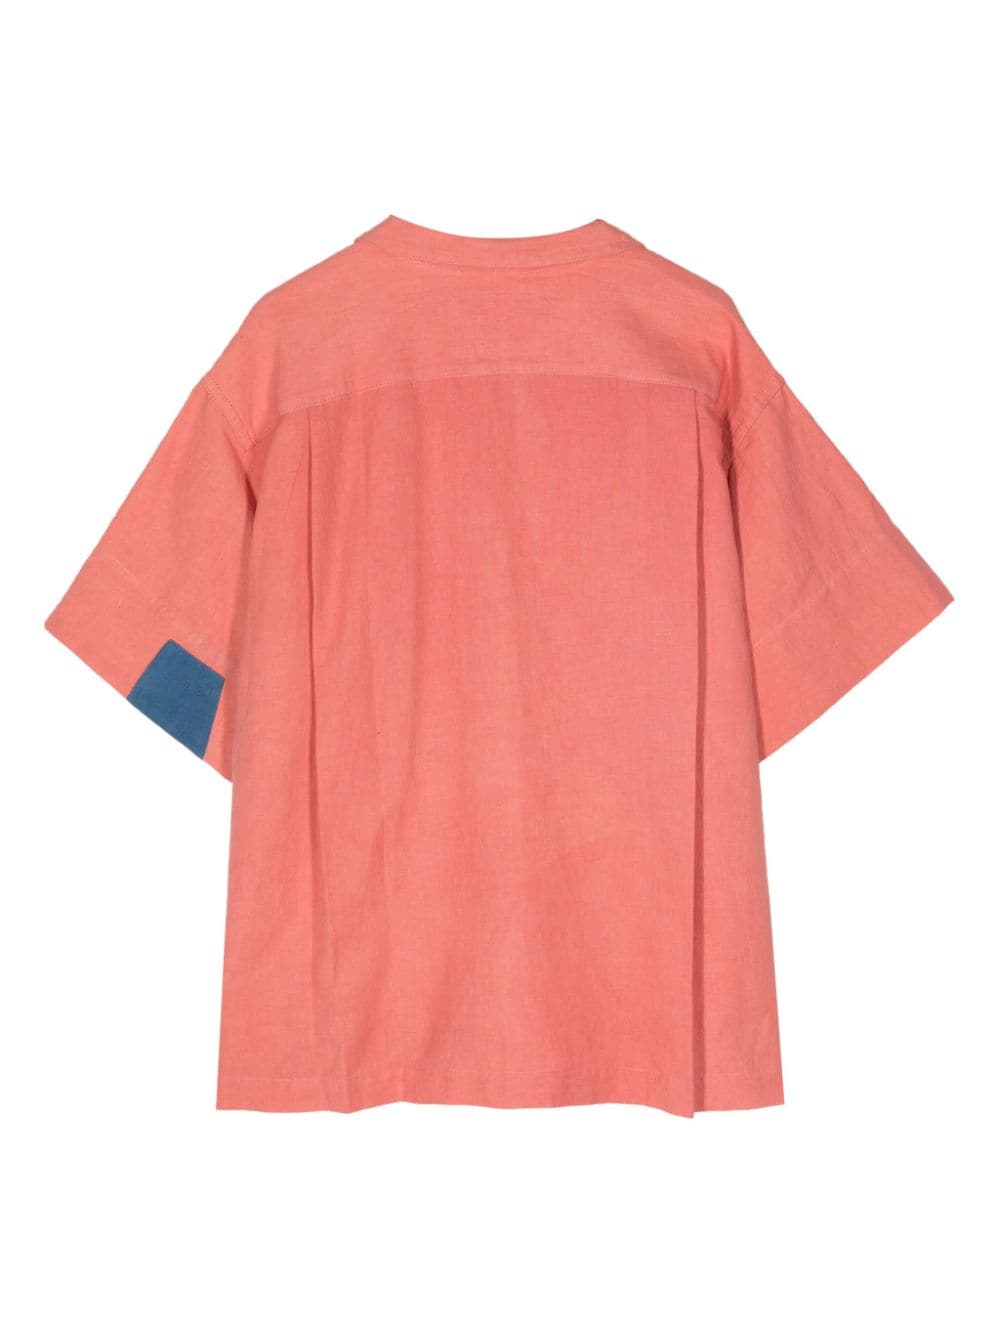 STORY mfg. PA appliqué-detail shirt - Roze